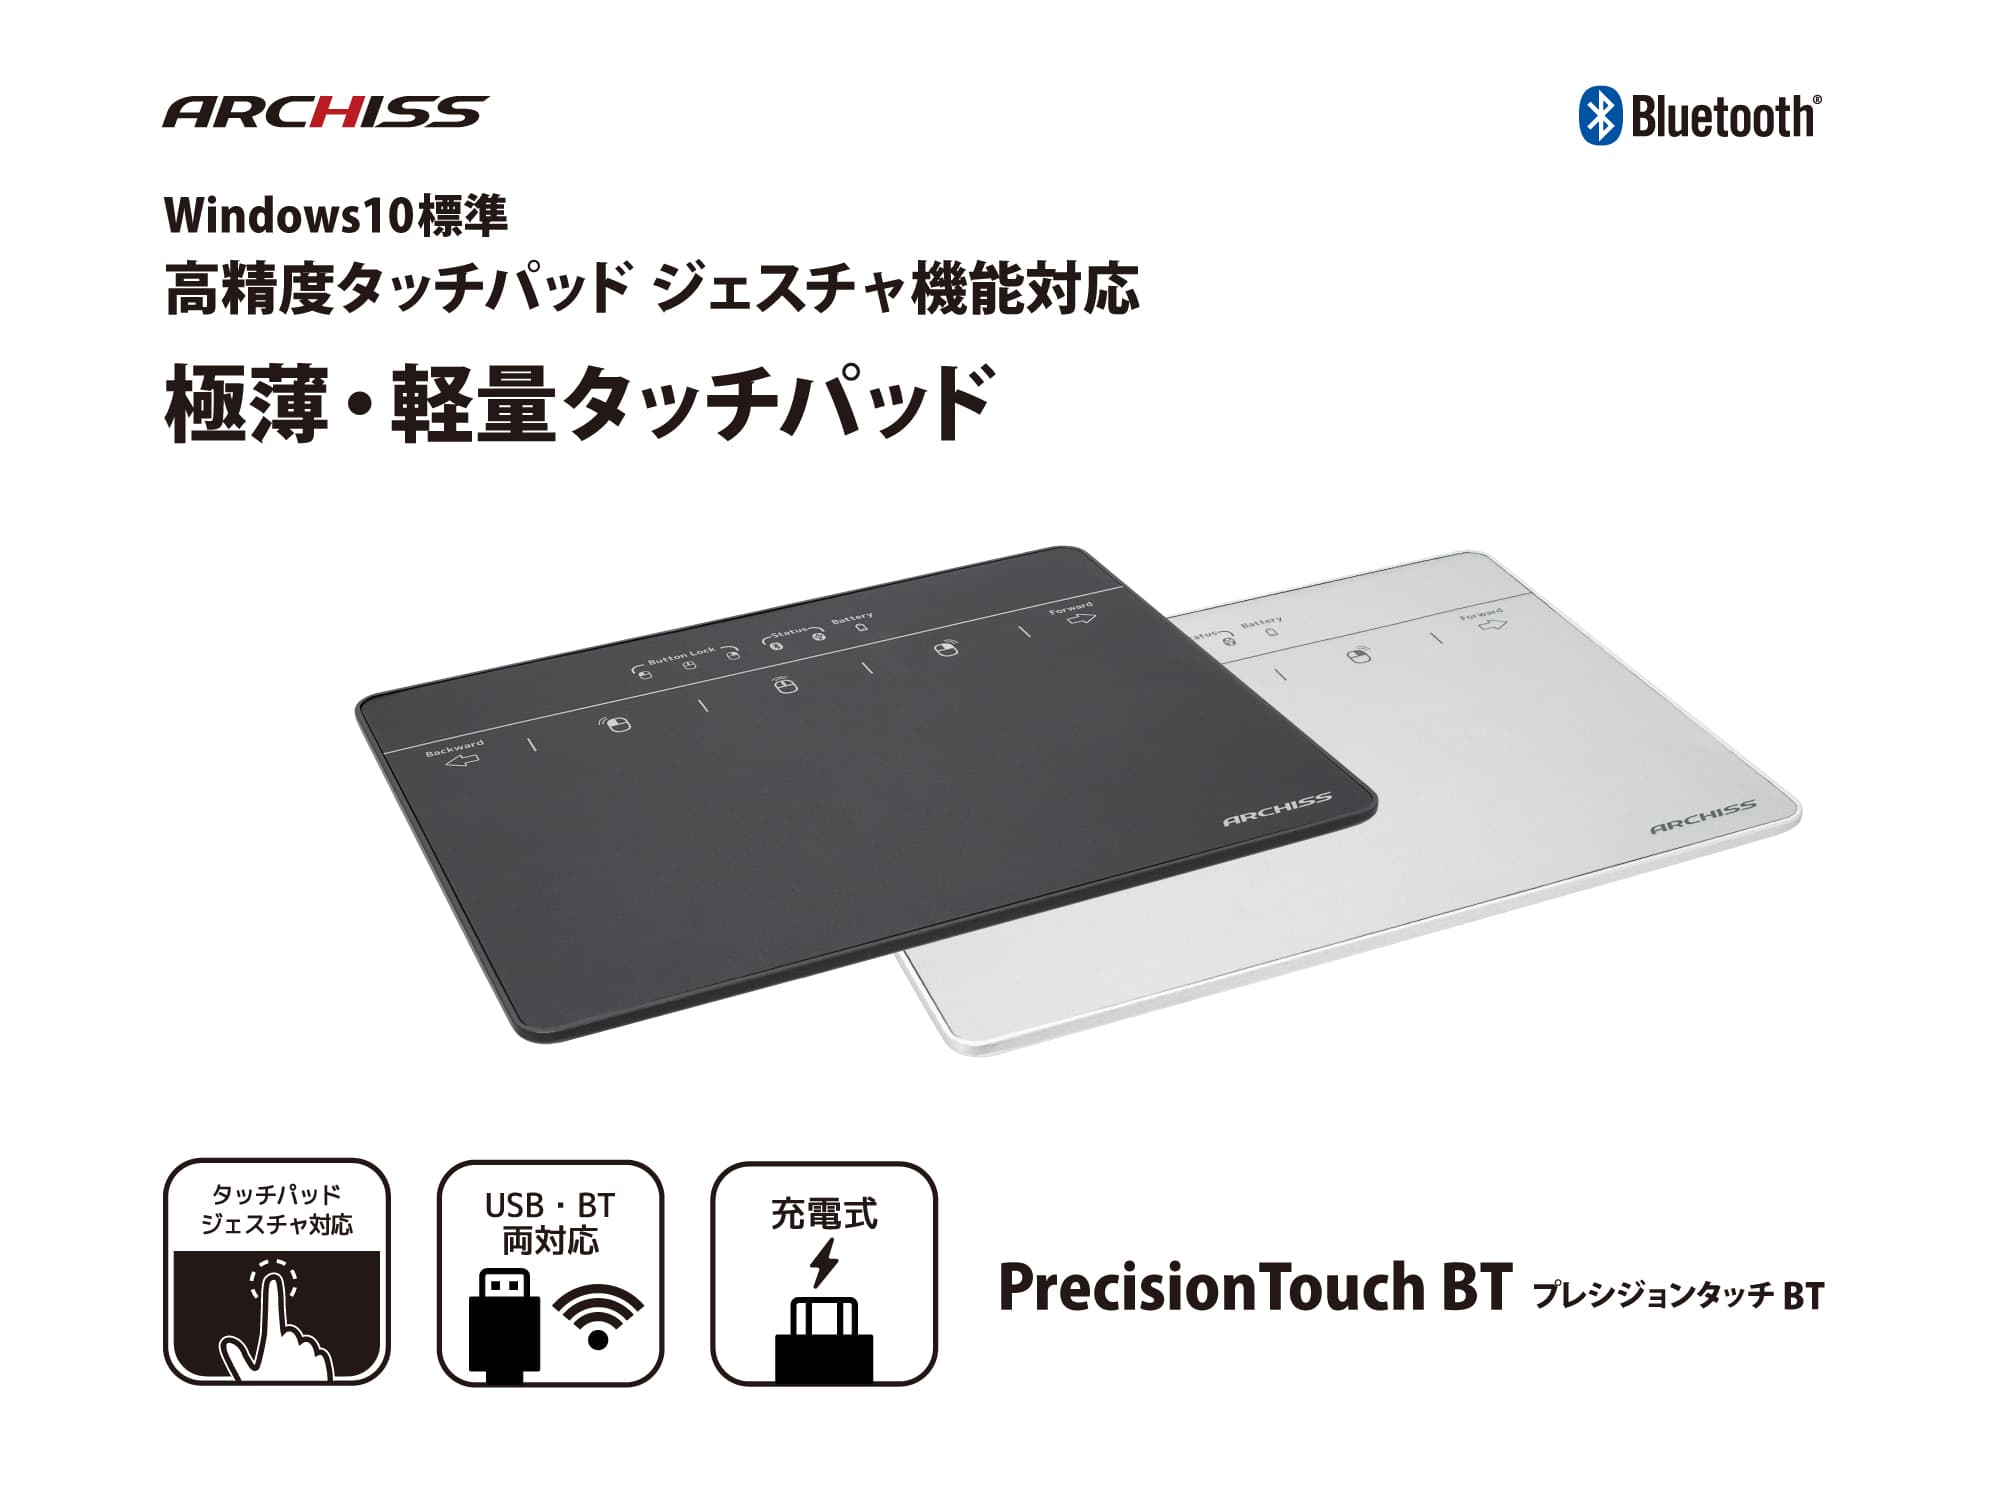 ARCHISS Precision Touch BT (AS-PTBT01)